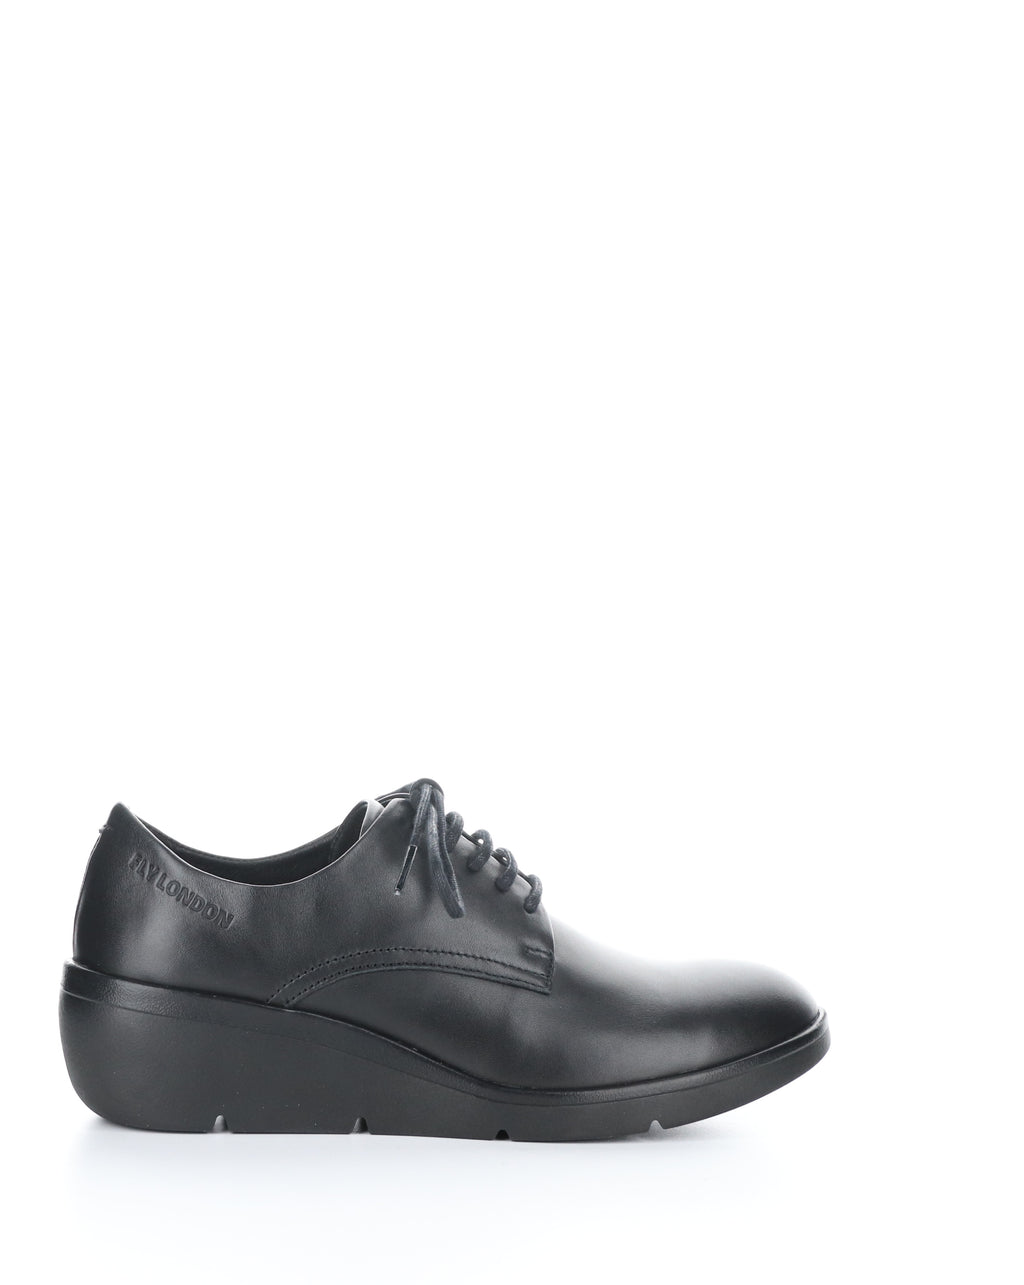 Sanctum IRIS - LACE-UP KNEE BOOTS BLACK RED SHINY - Shoebidoo Shoes